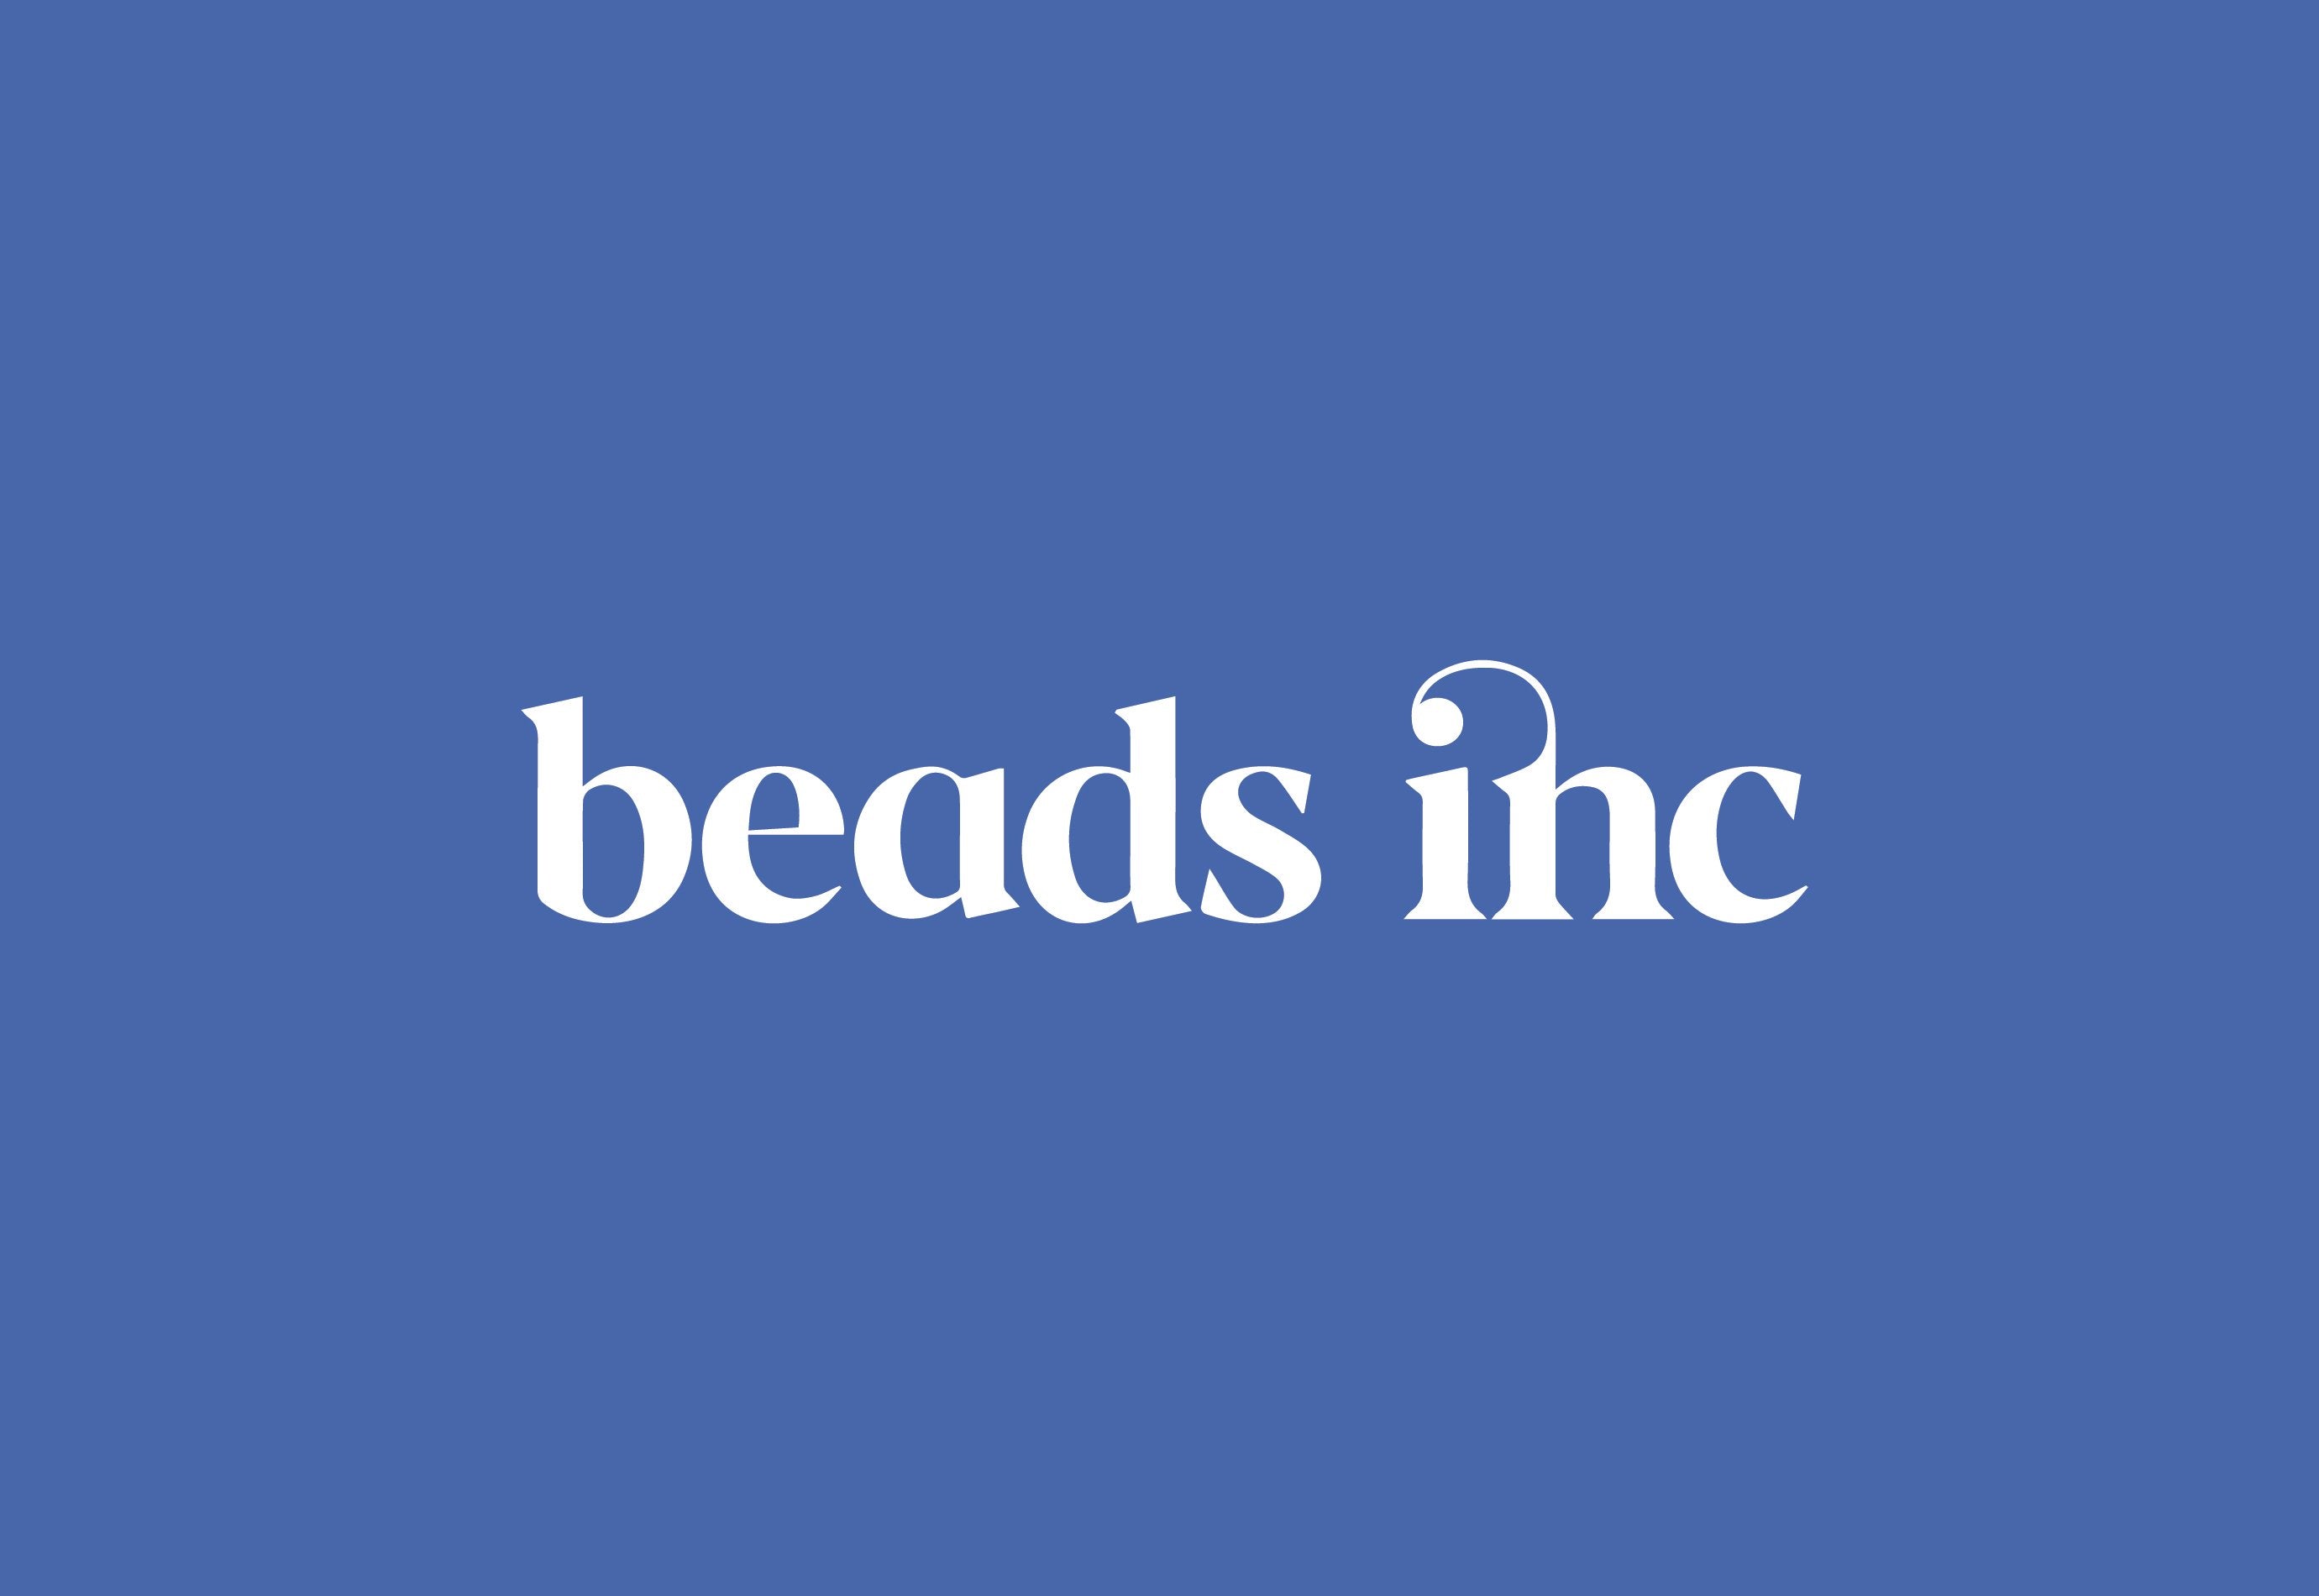 Stretchy Bracelet Kits – Beads, Inc.